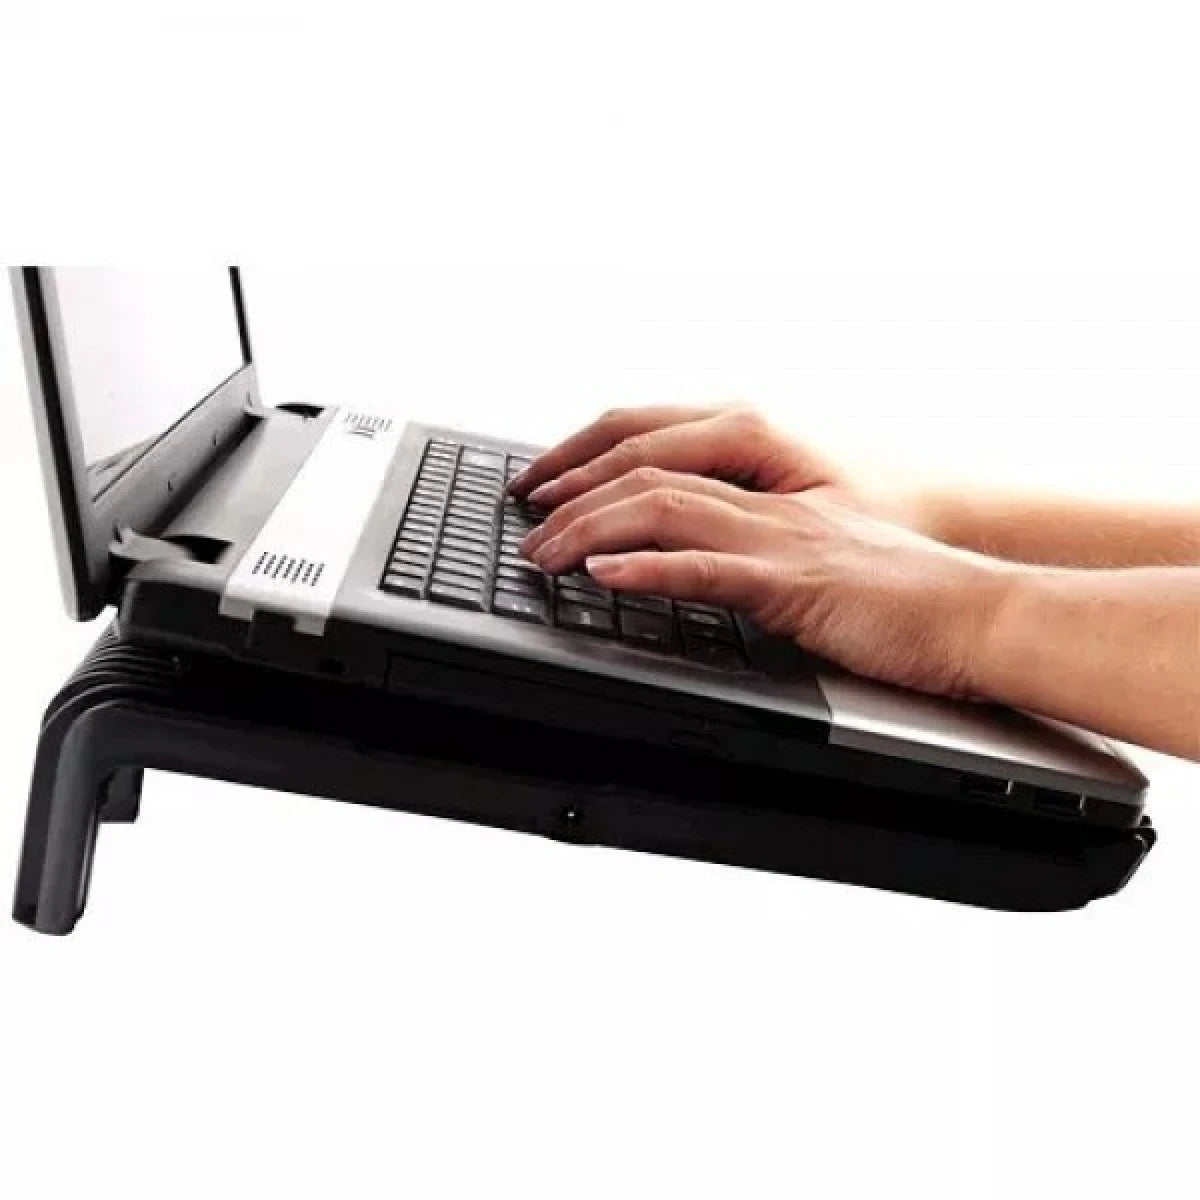 Fellowes Maxi Cool Laptop Rise Cooling fan keeps laptop cool - Black